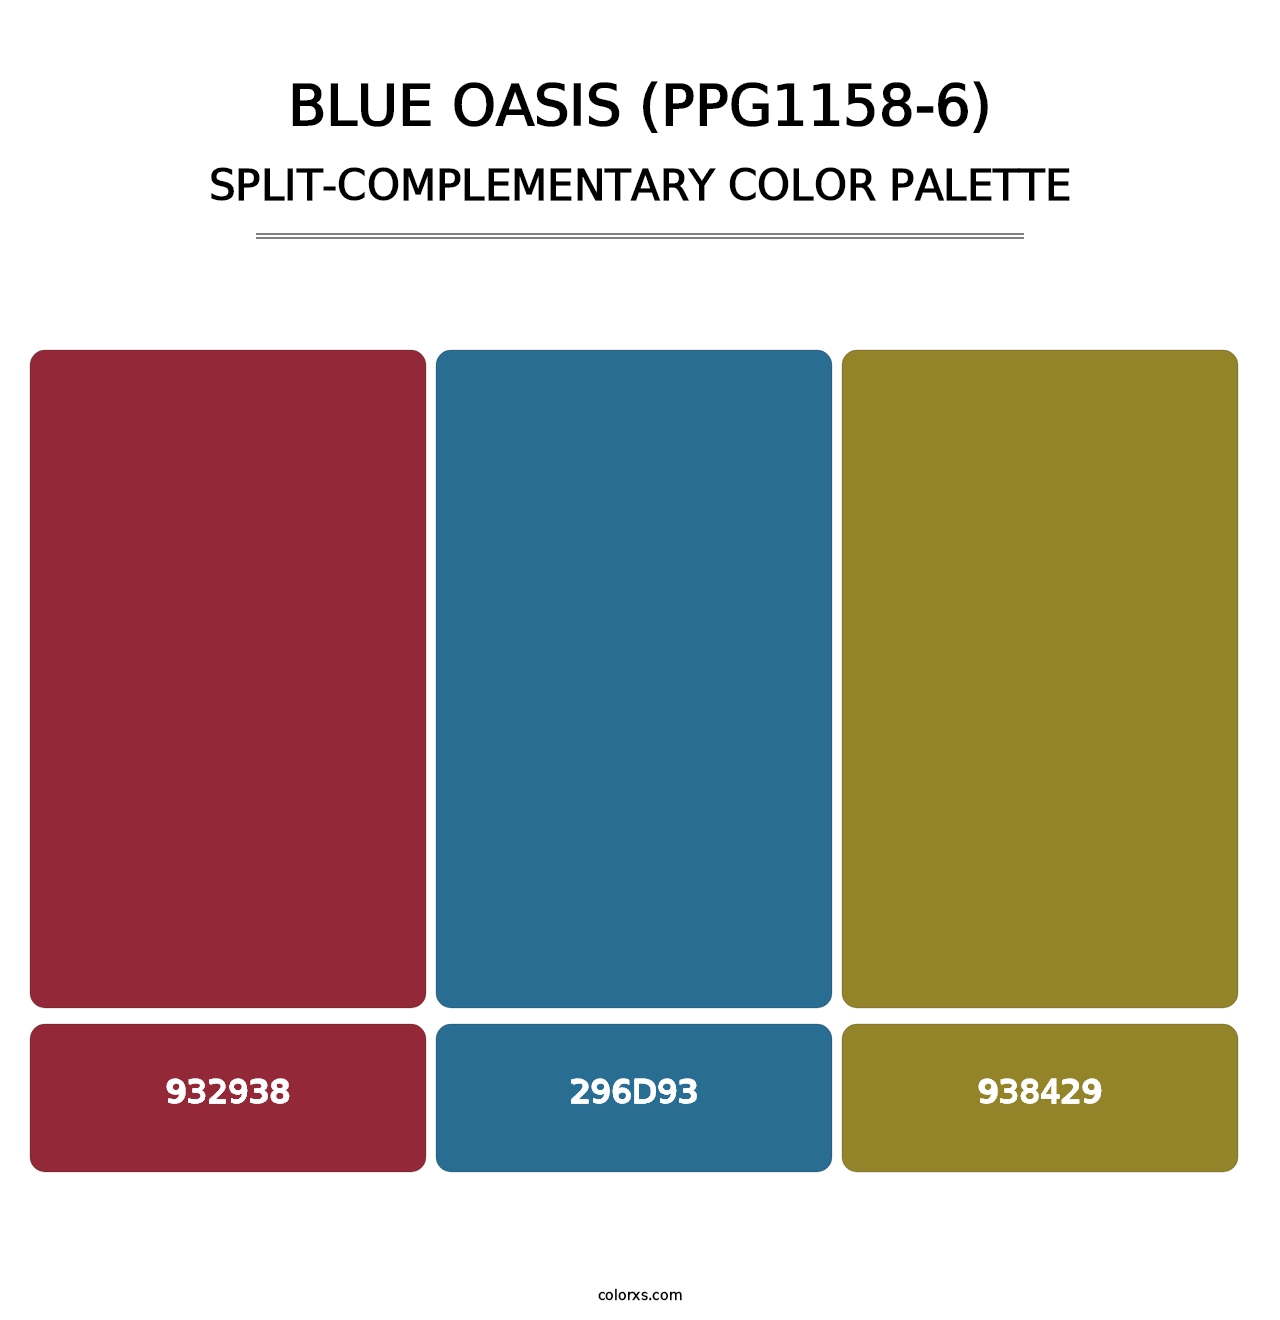 Blue Oasis (PPG1158-6) - Split-Complementary Color Palette